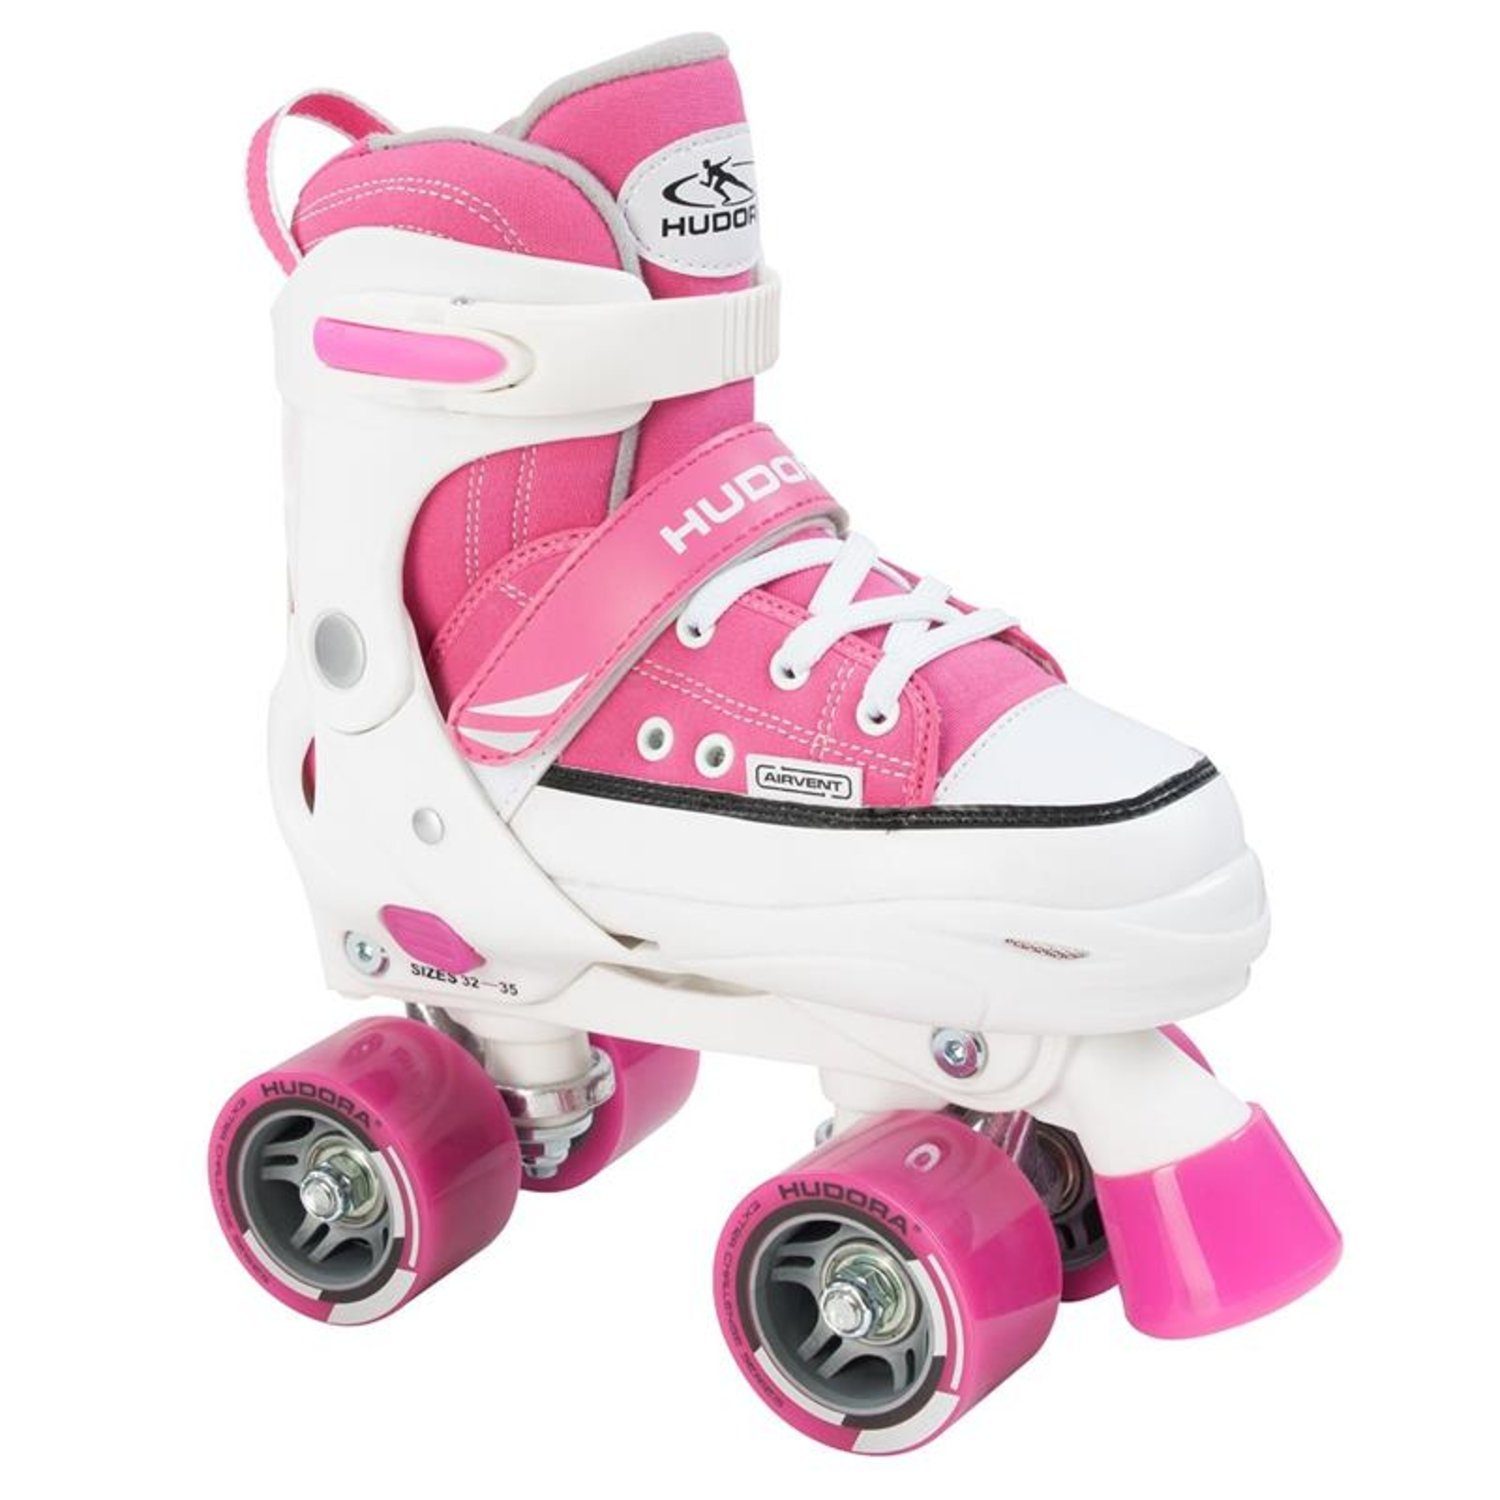 Hudora 32-35 pink, Skate, verstellbar 22034 Inlineskates Gr. Roller